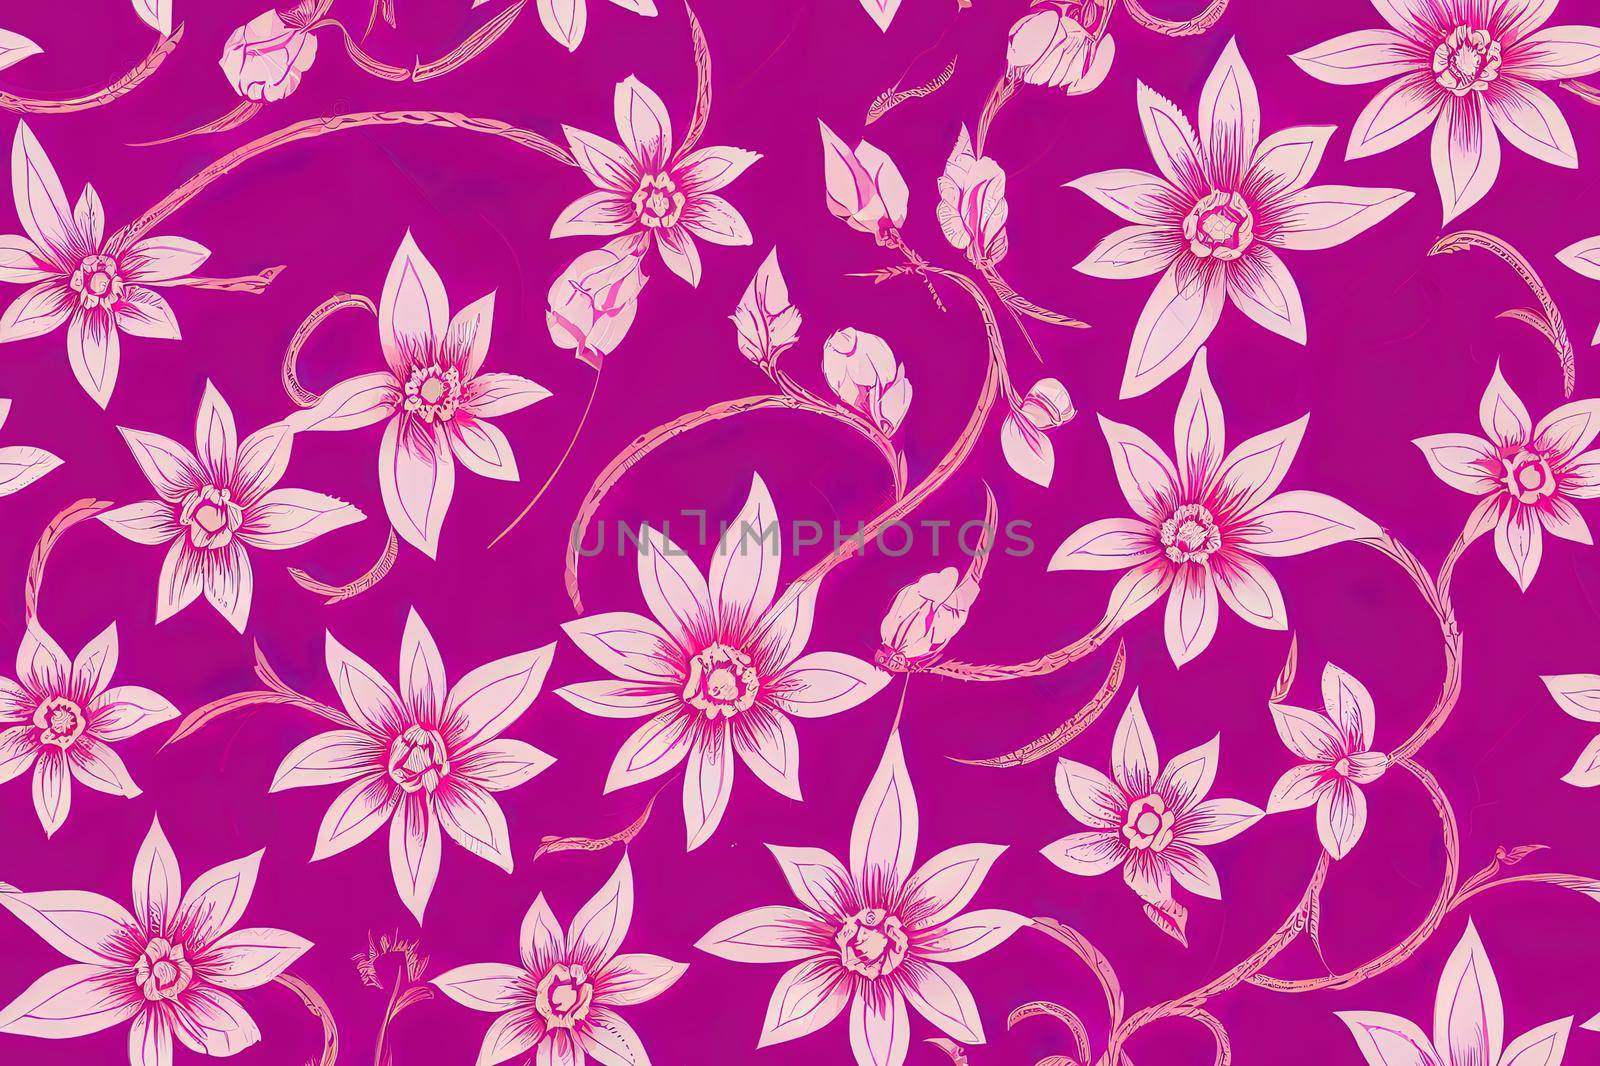 Seamless mughal floral Motif pattern on digital background by 2ragon